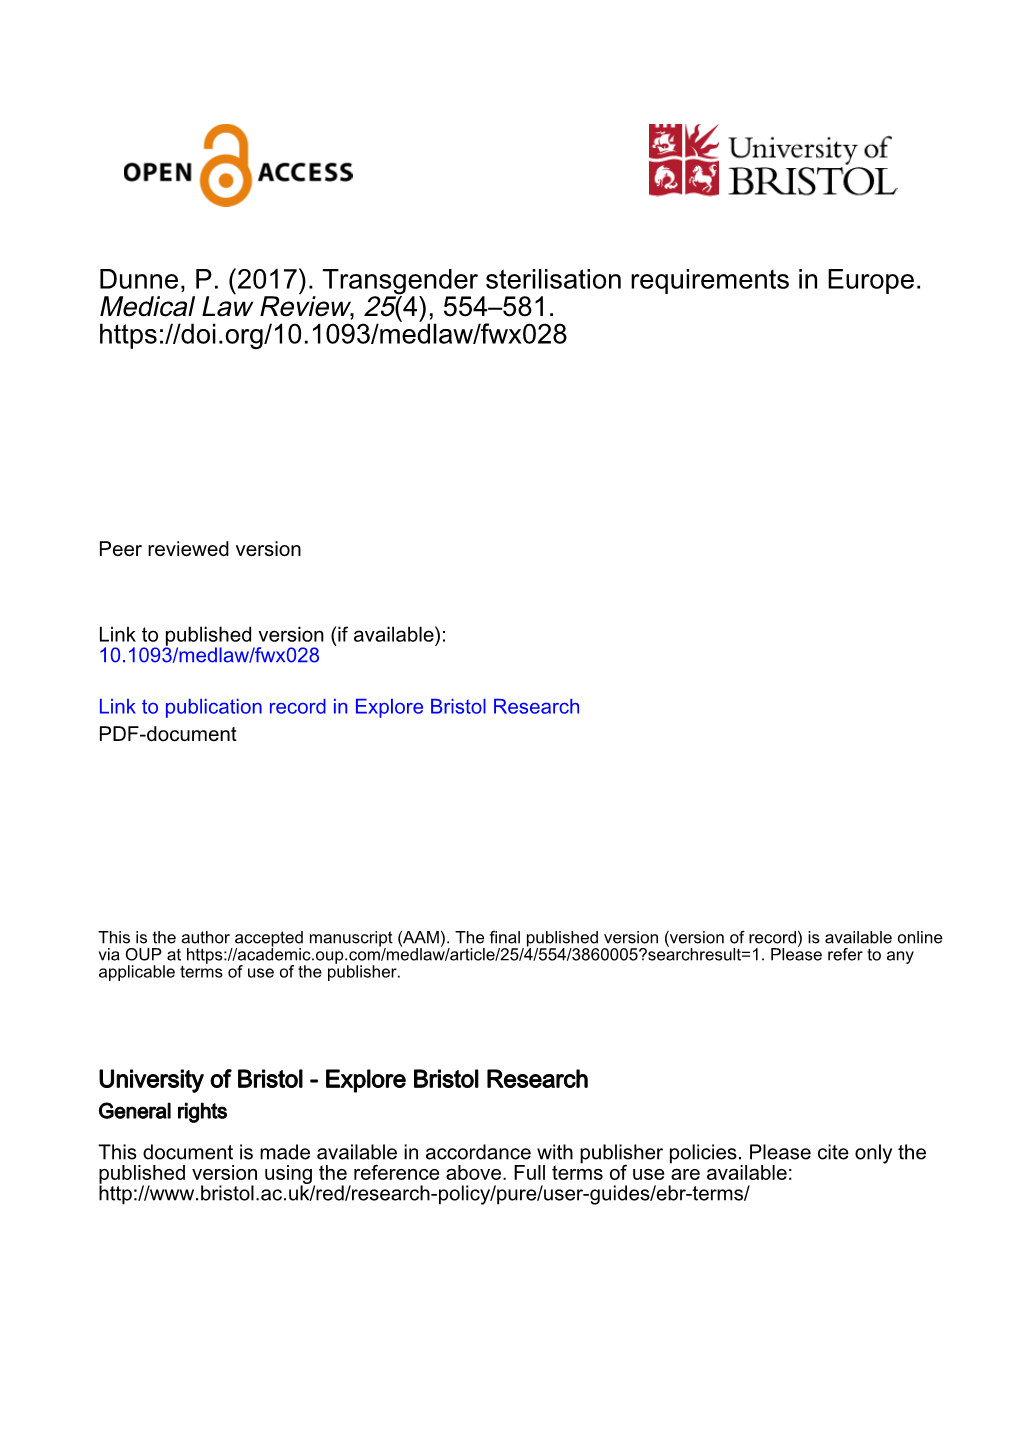 Dunne, P. (2017). Transgender Sterilisation Requirements in Europe